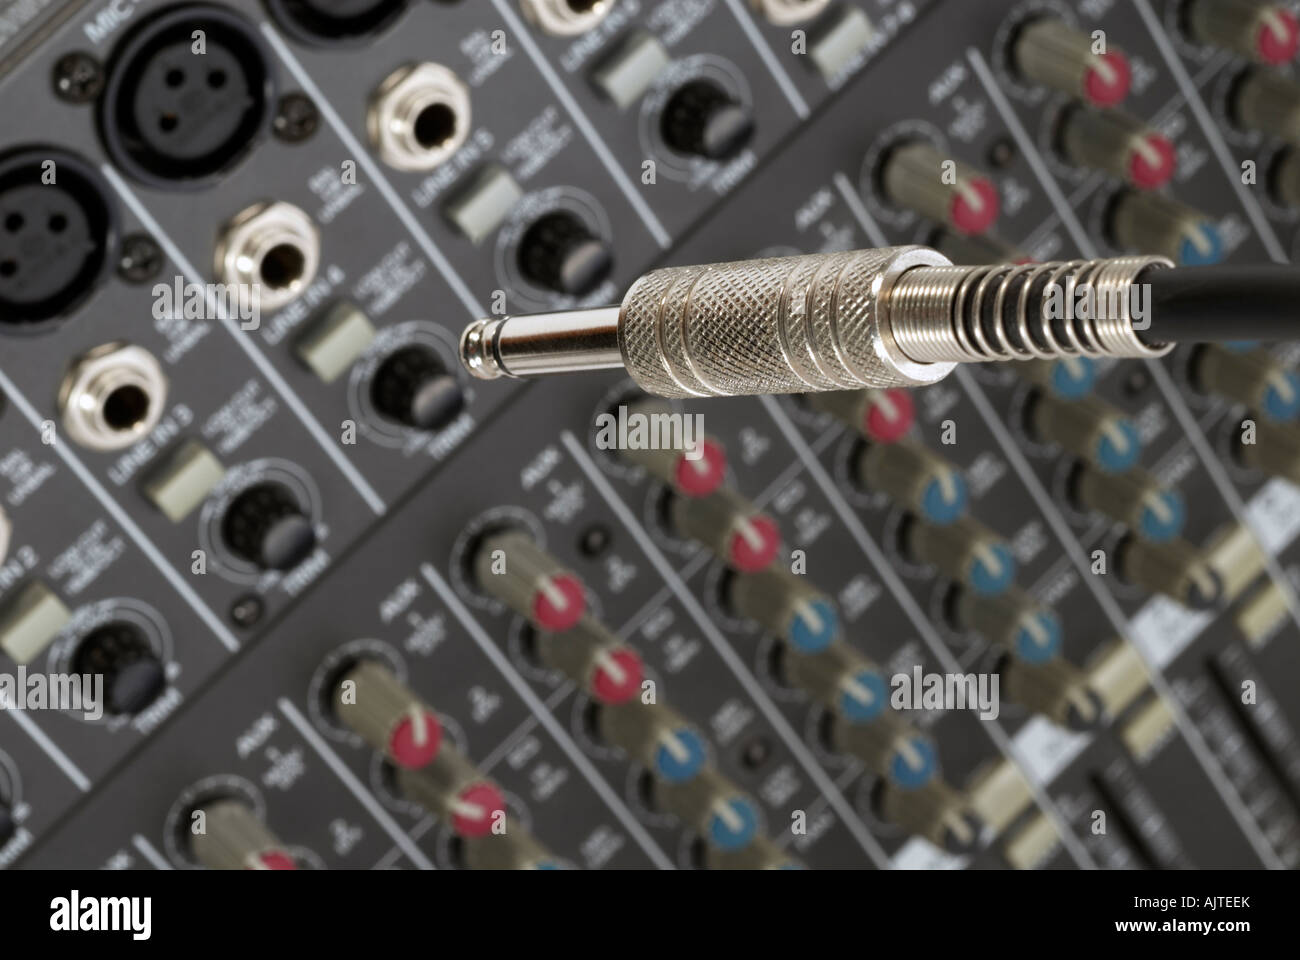 Small audio mixing desk Stock Photo